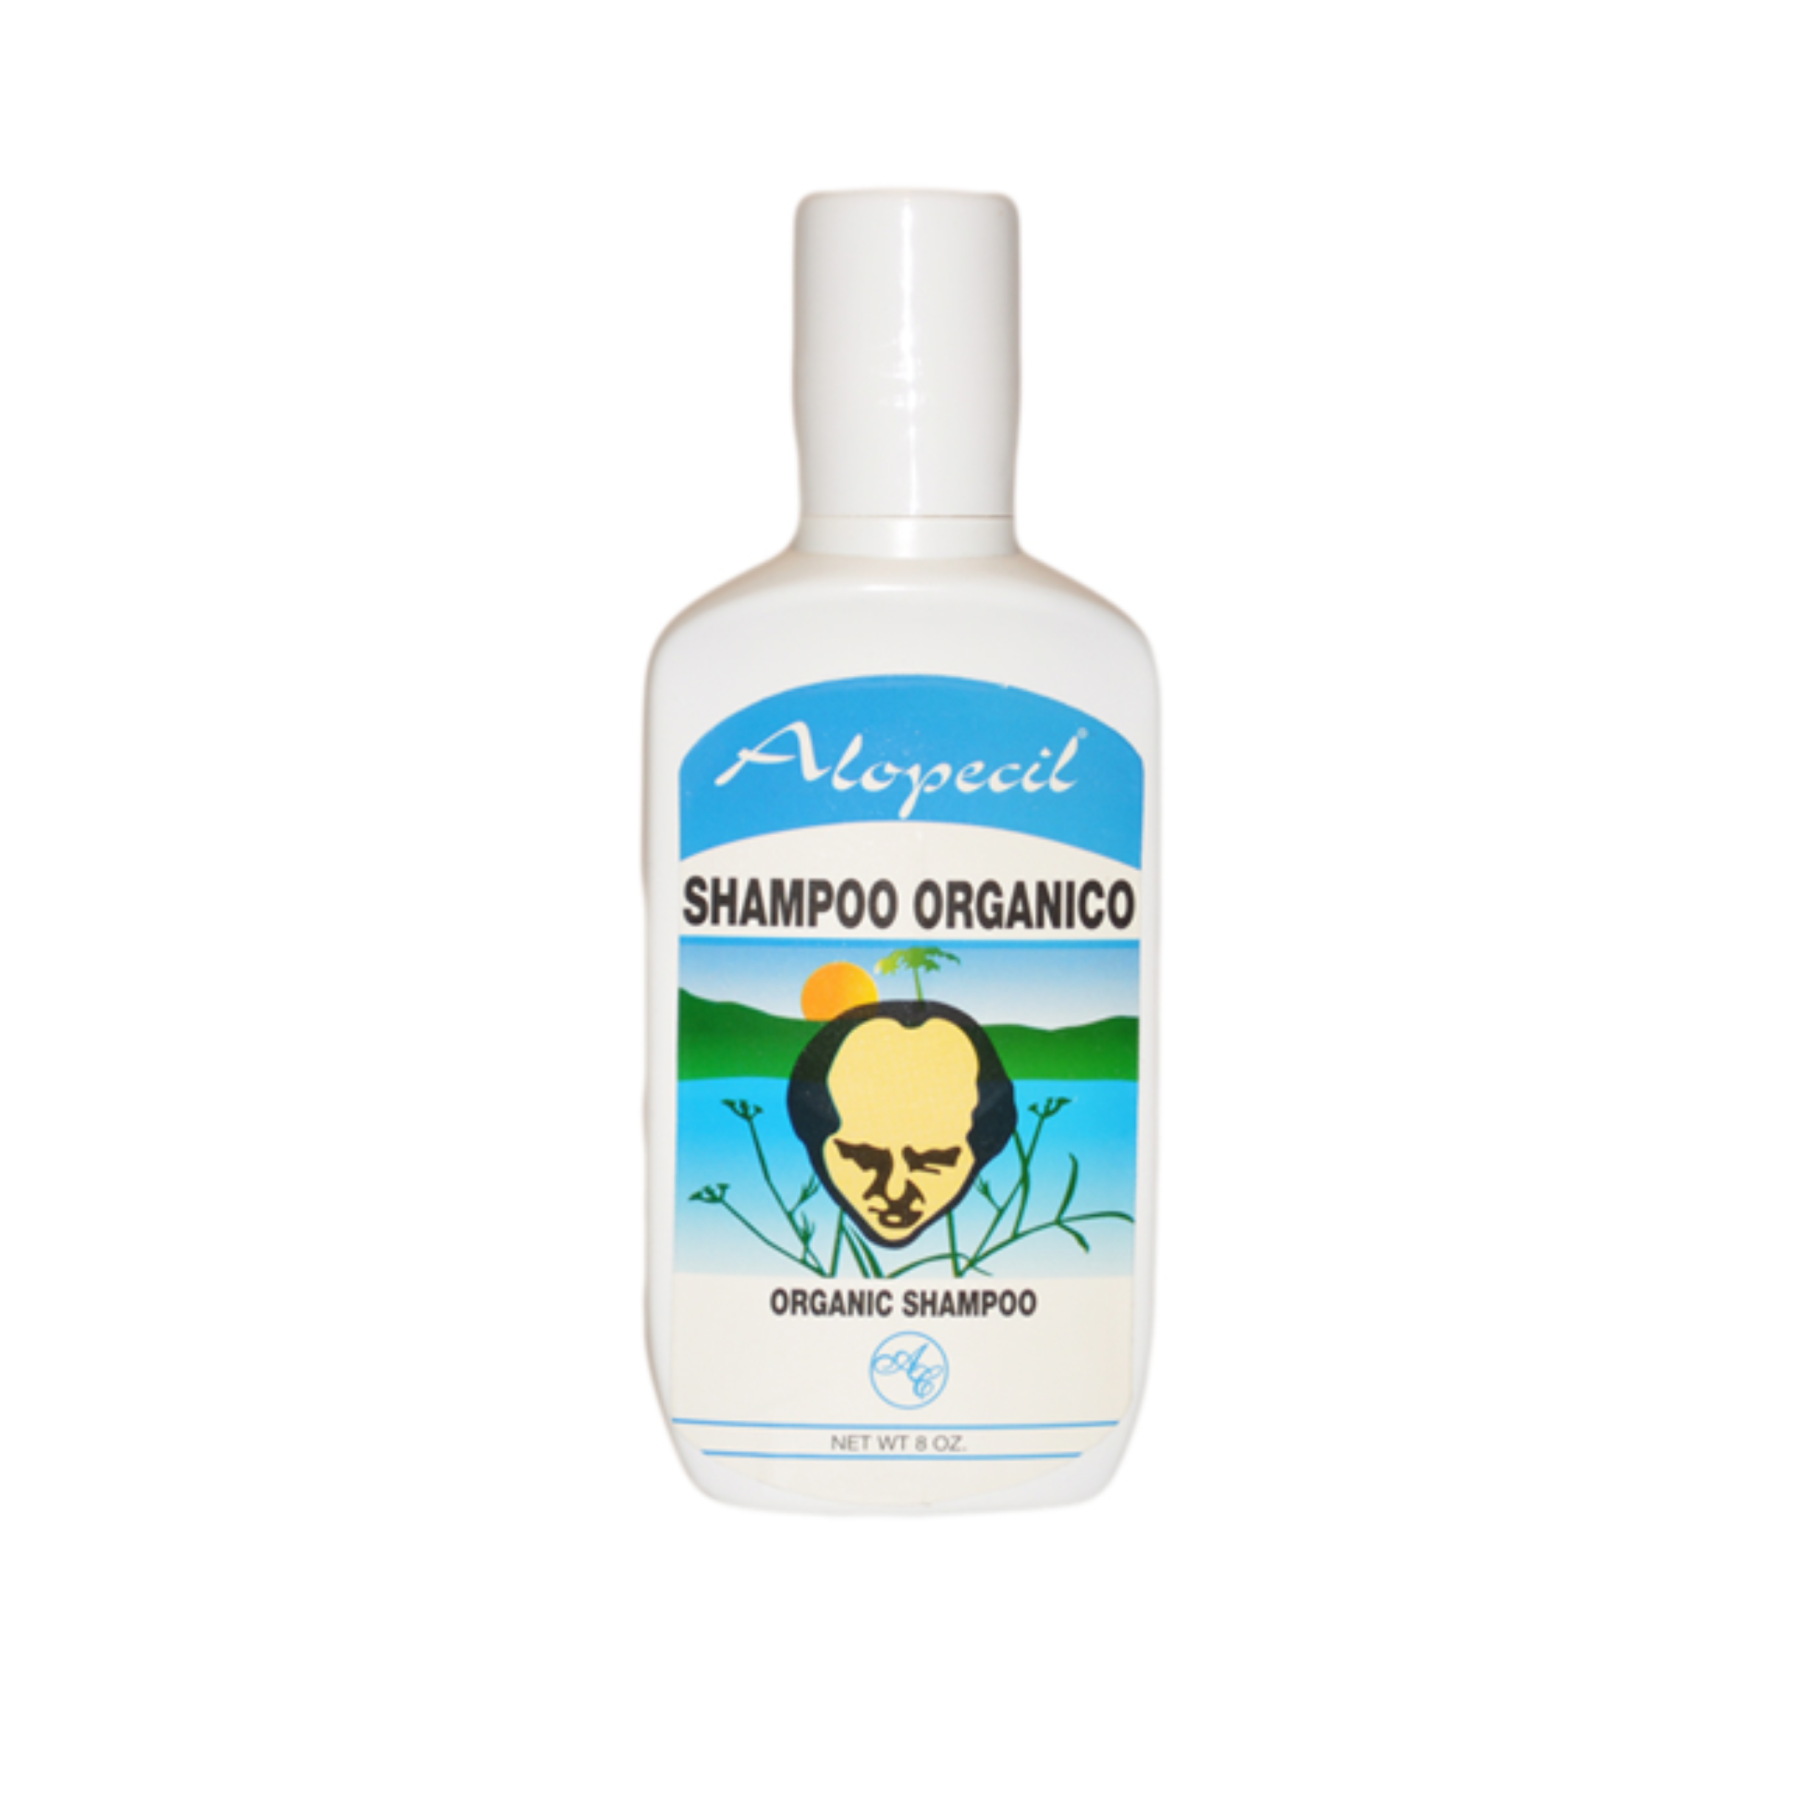 Alopecil Organic Shampoo 8 oz (Blue)